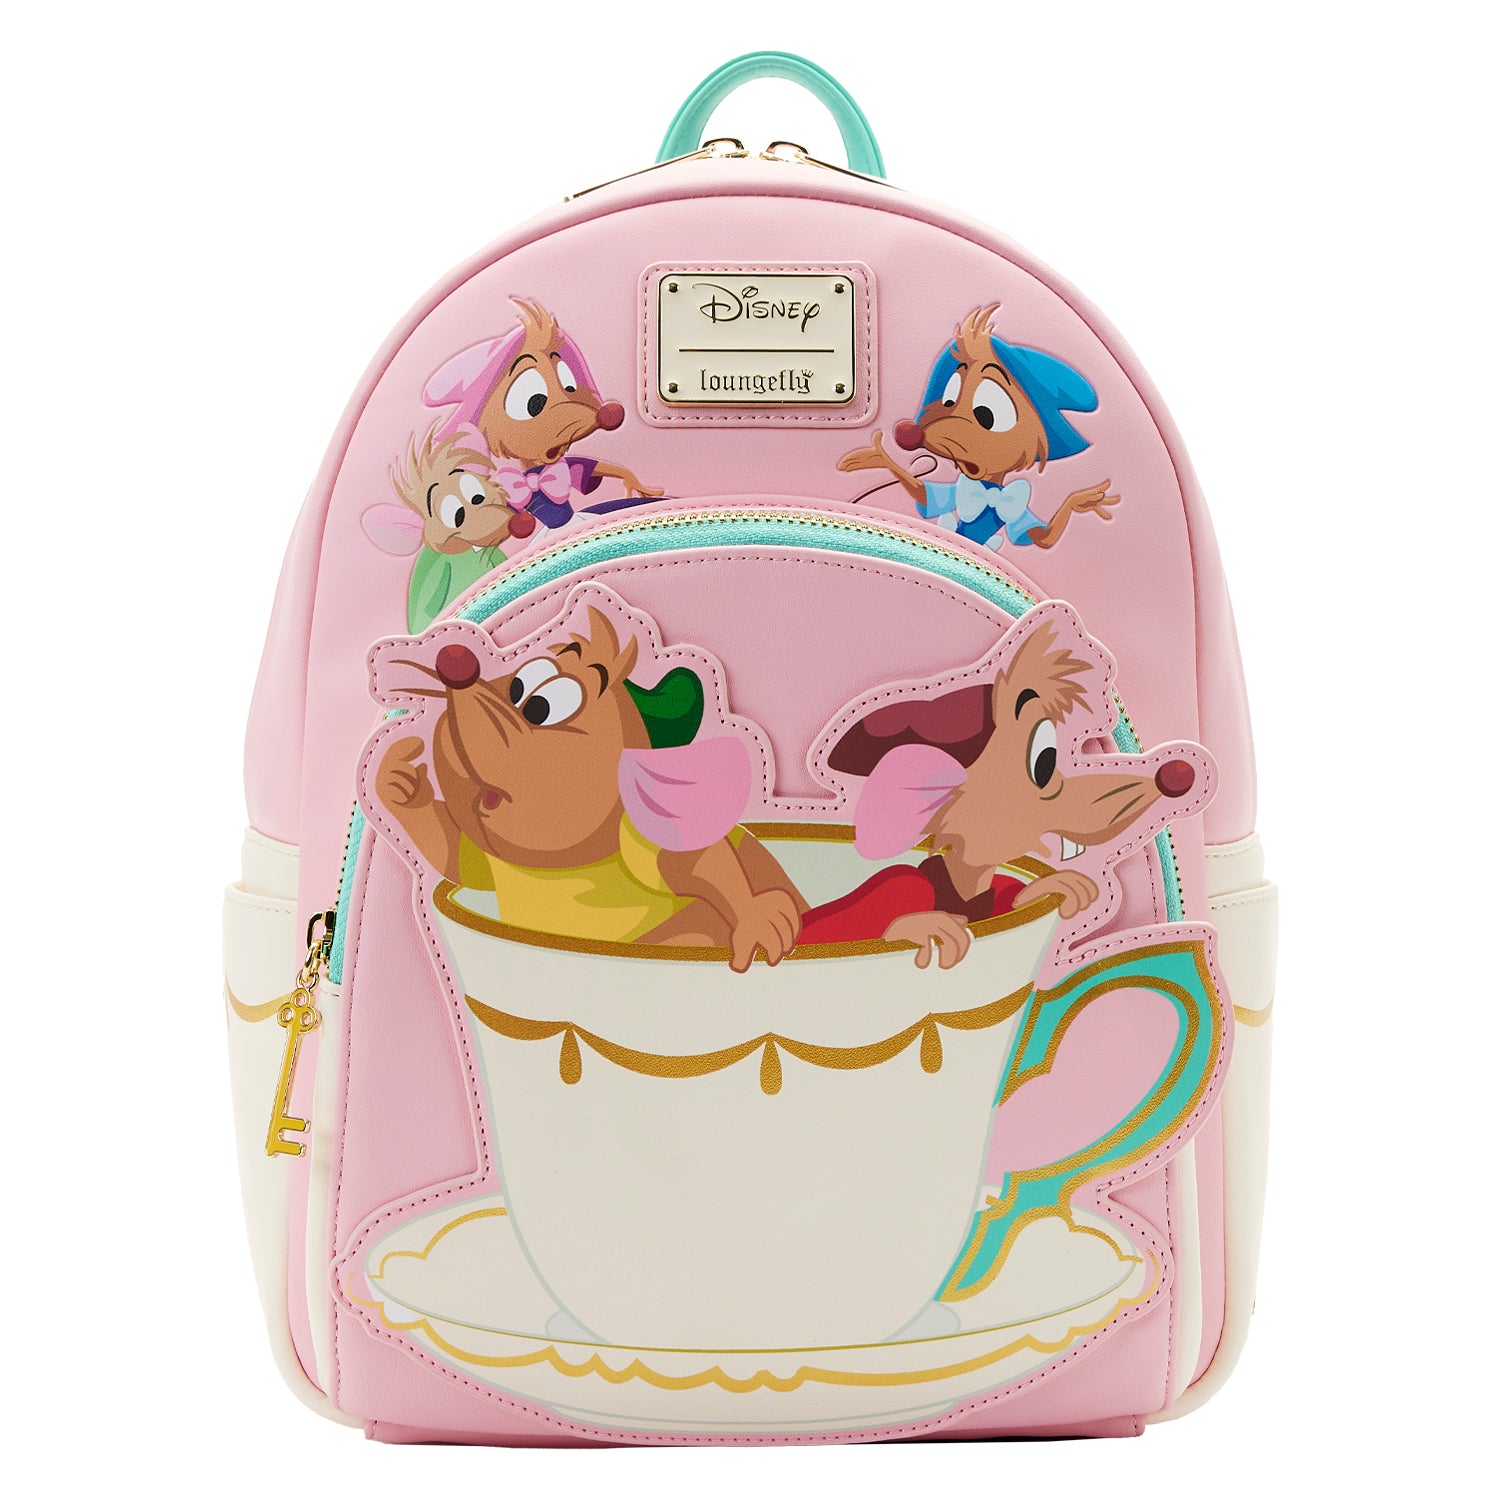 Disney | Cinderella Gus Gus and Jaq Teacup Mini Backpack